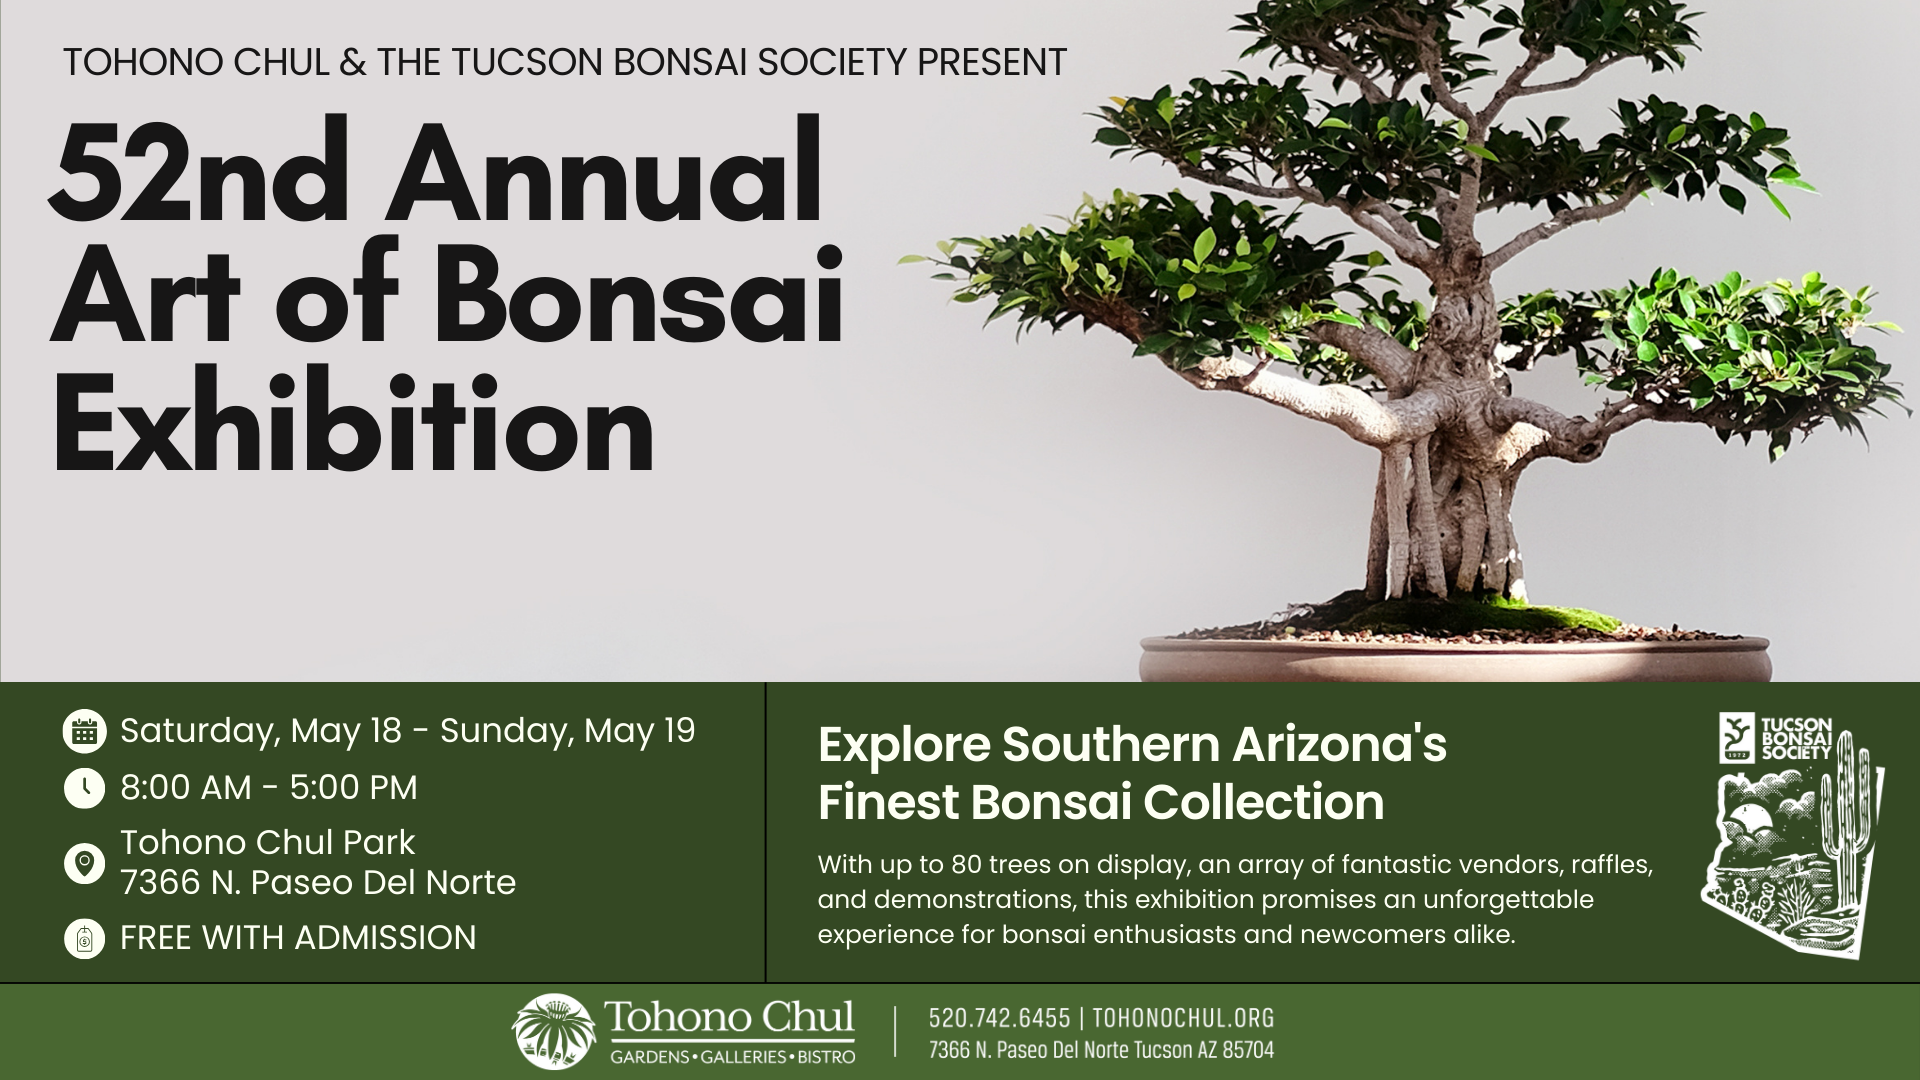 Tucson Bonsai Exhibition at Tohono Chul